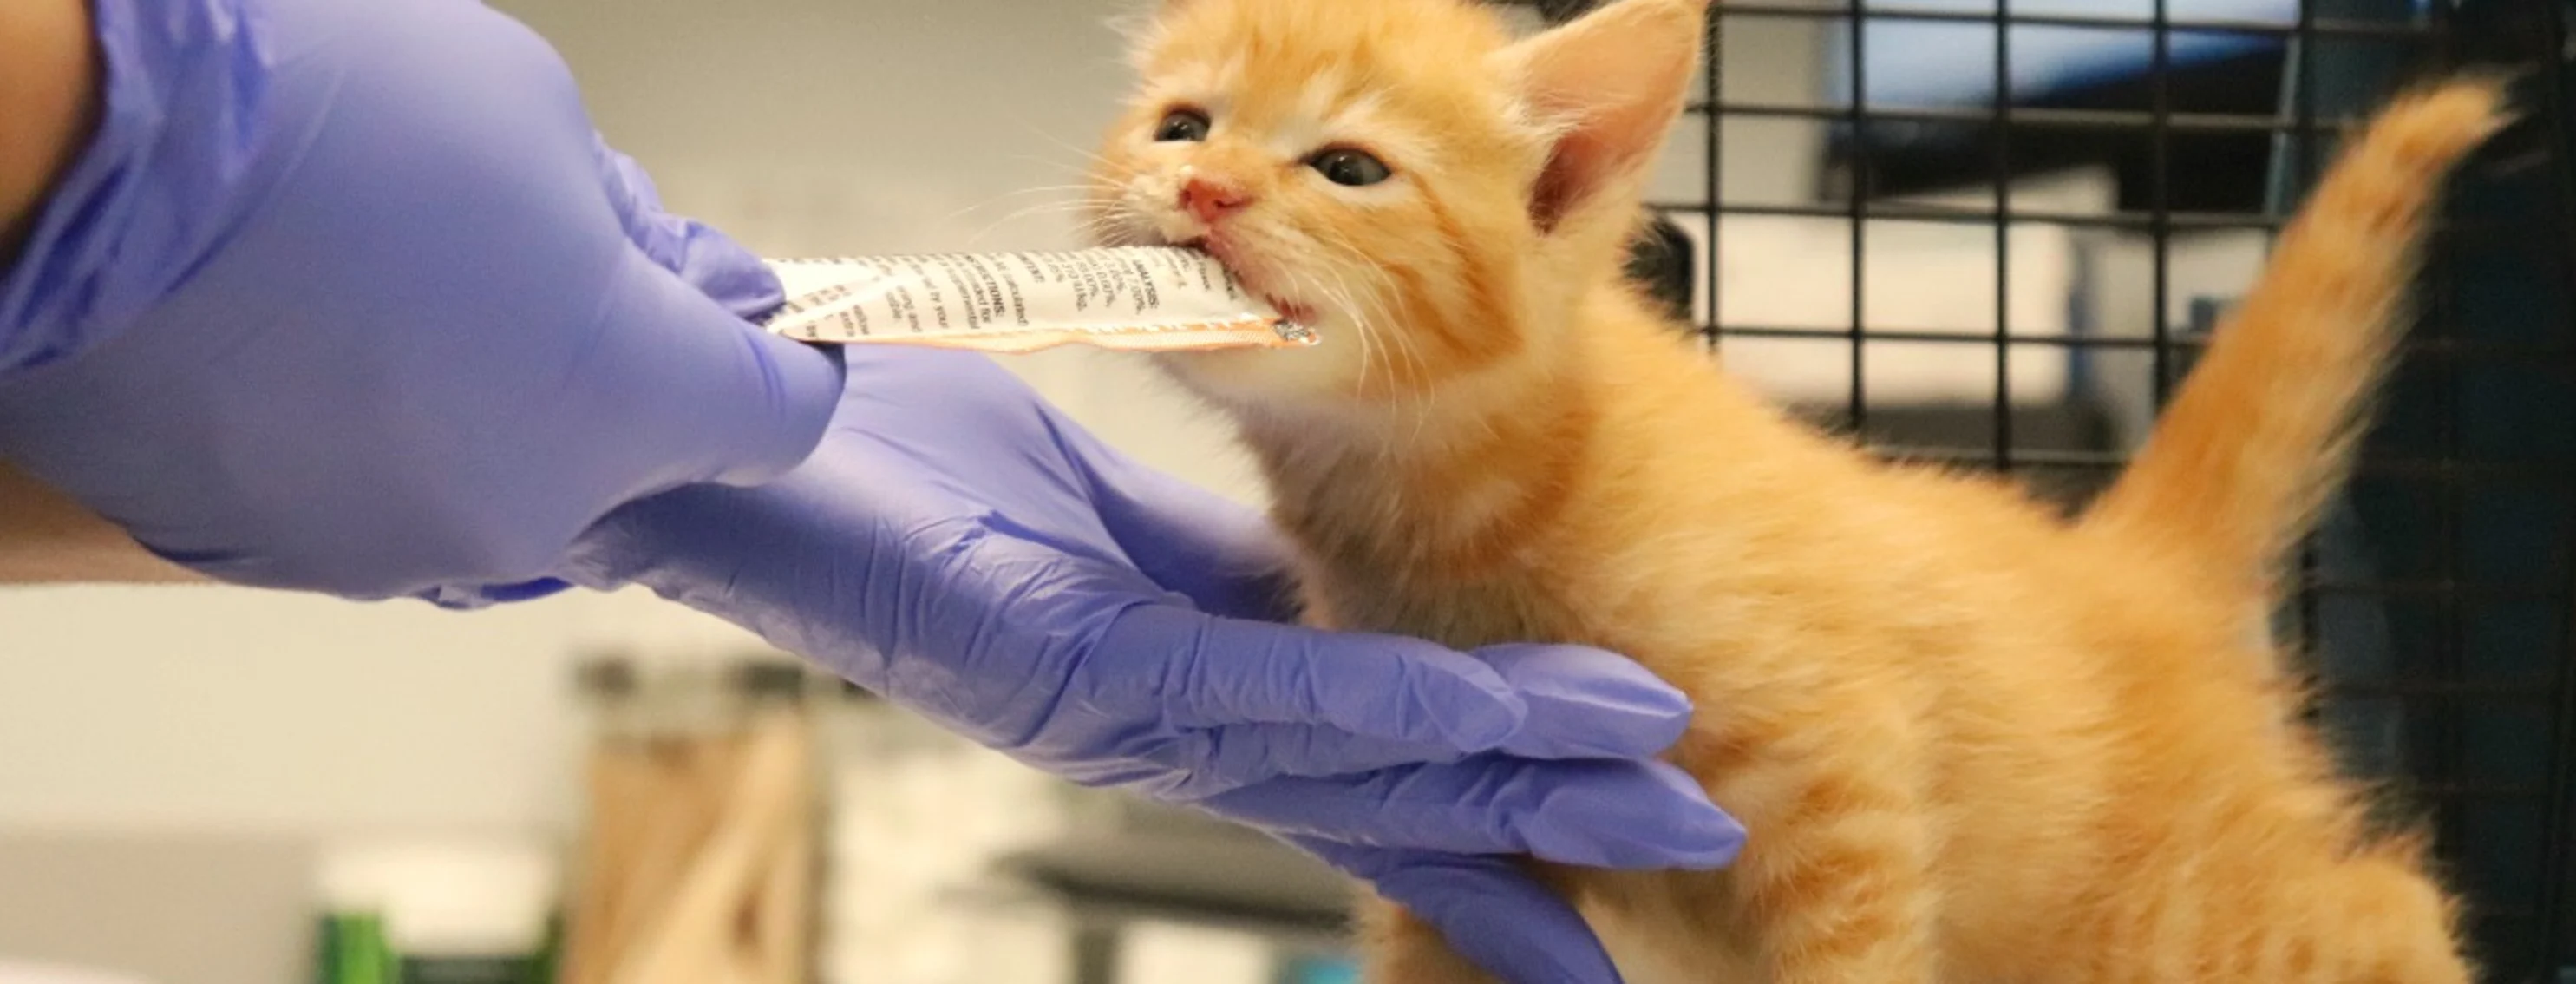 Orange kitten being treated.